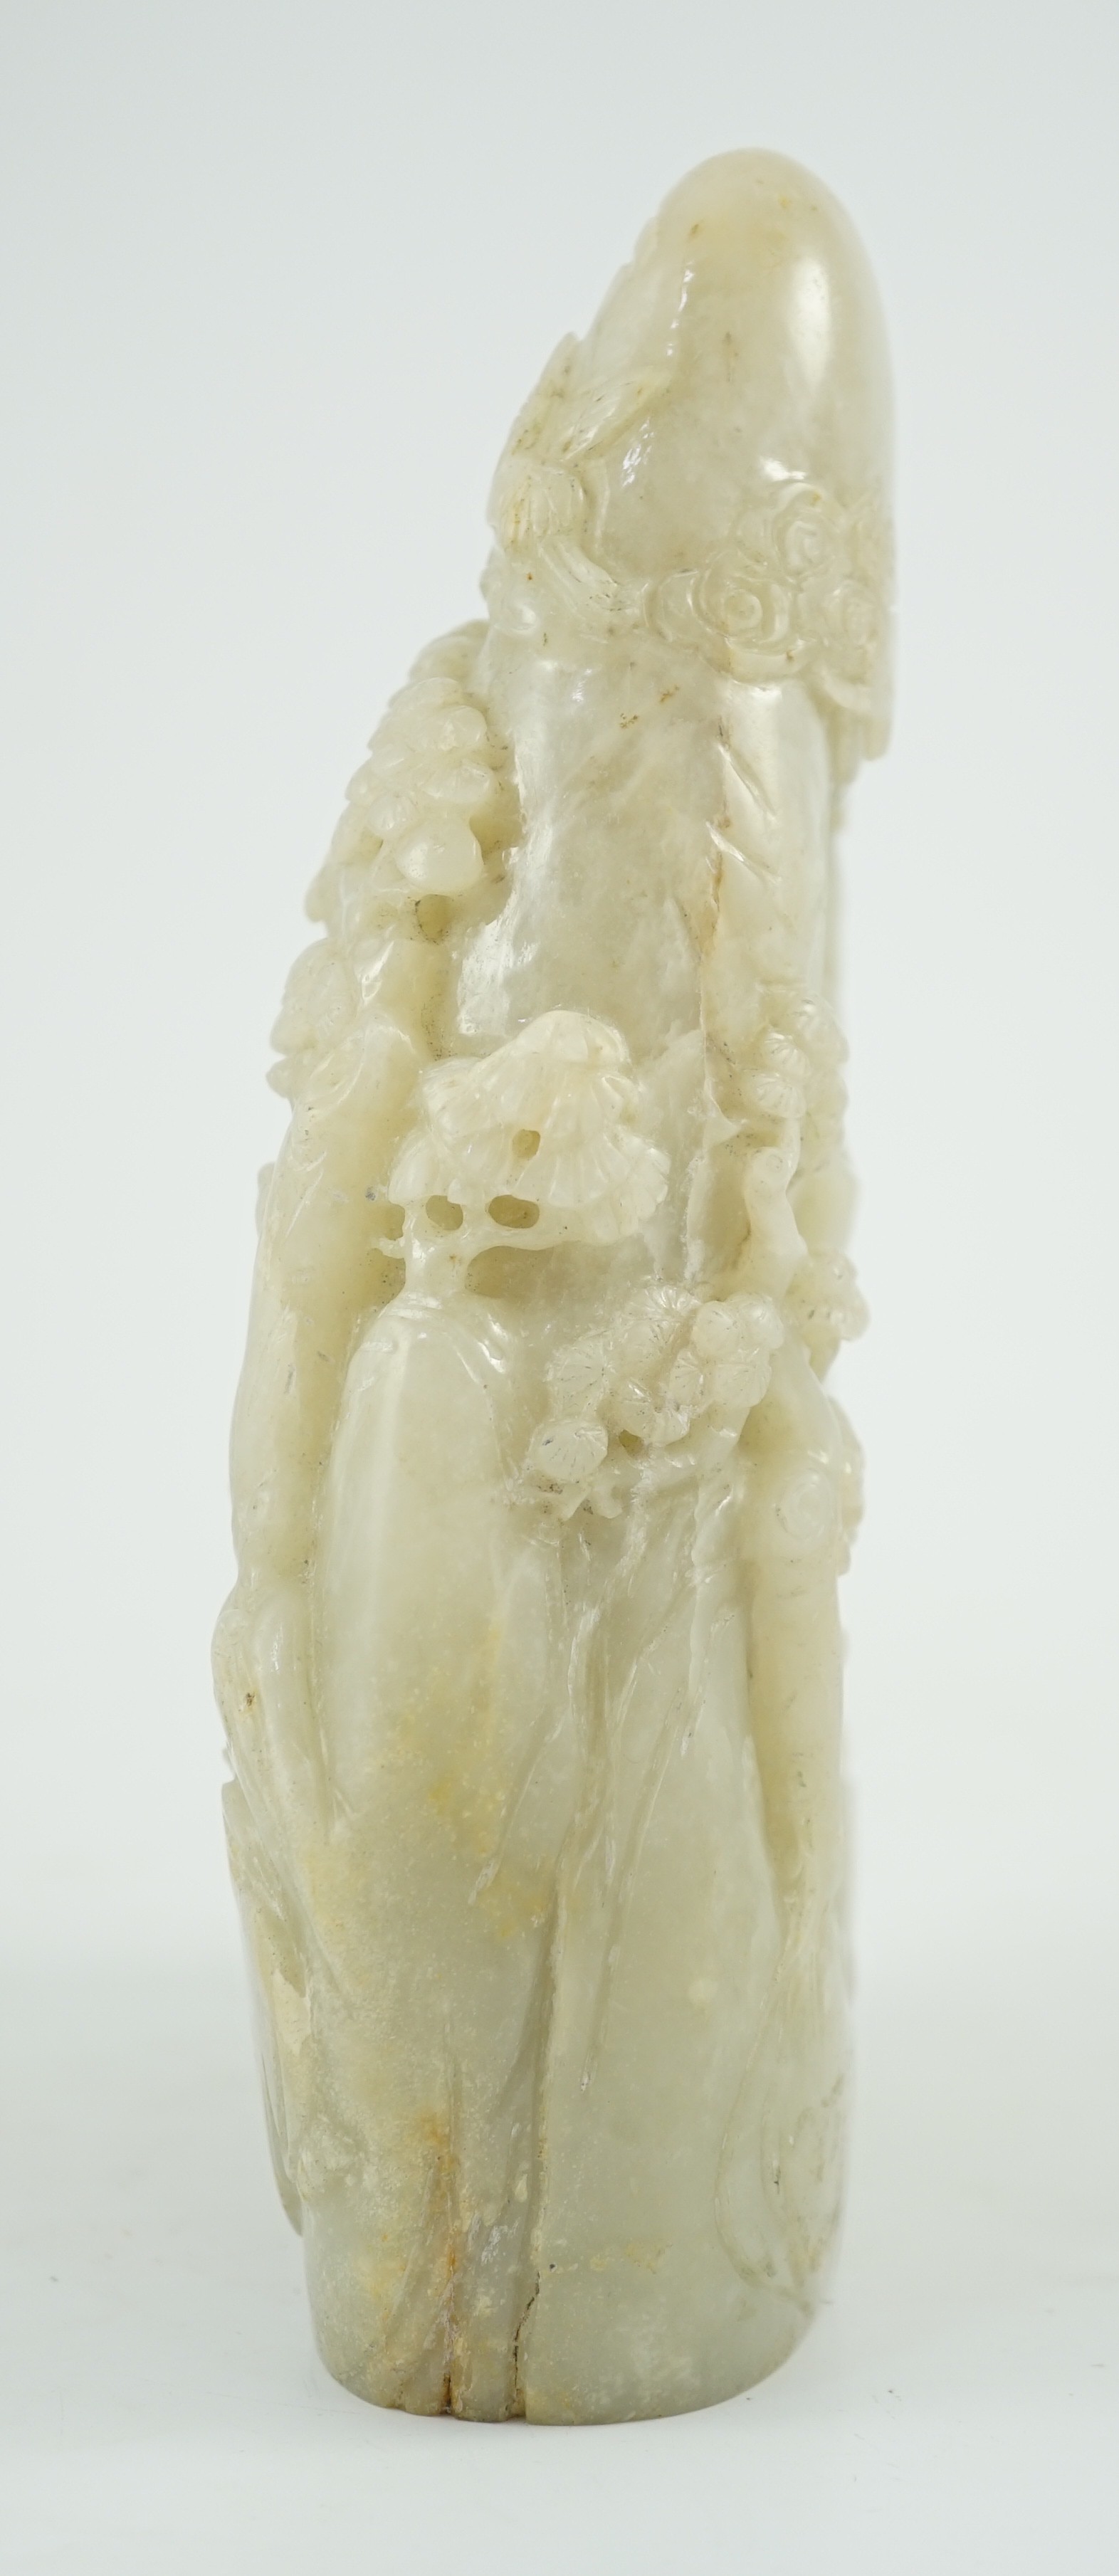 A Chinese pale celadon jade boulder carving, 21cm high 15.5cm wide